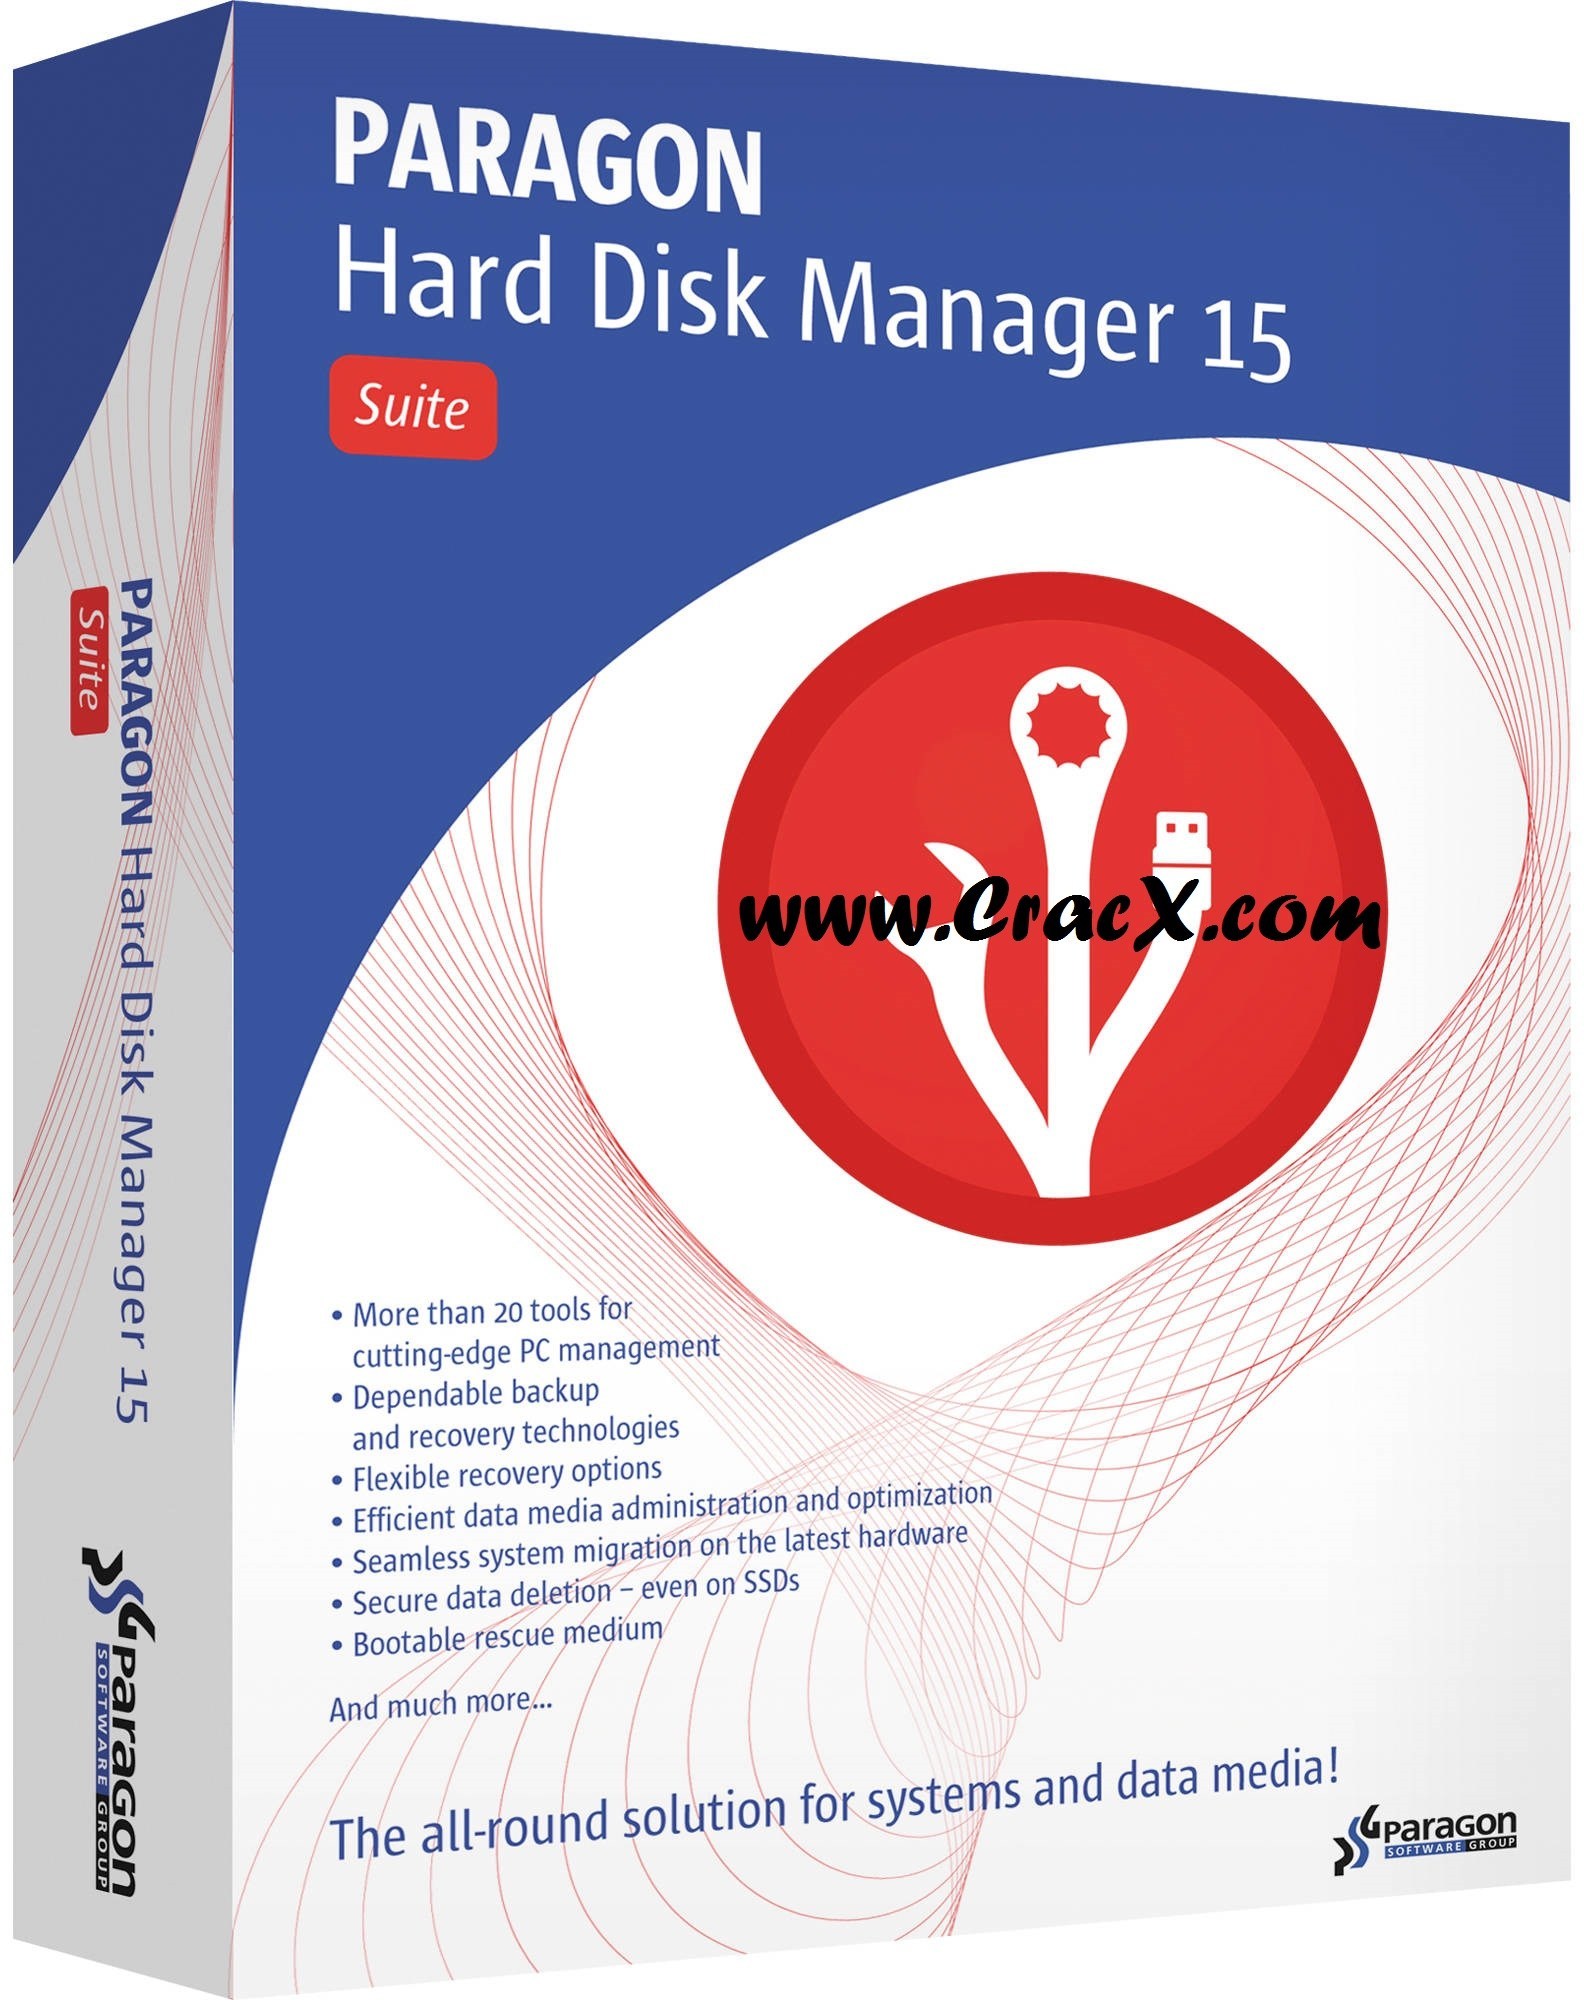 Paragon hard disk manager 15 free download full